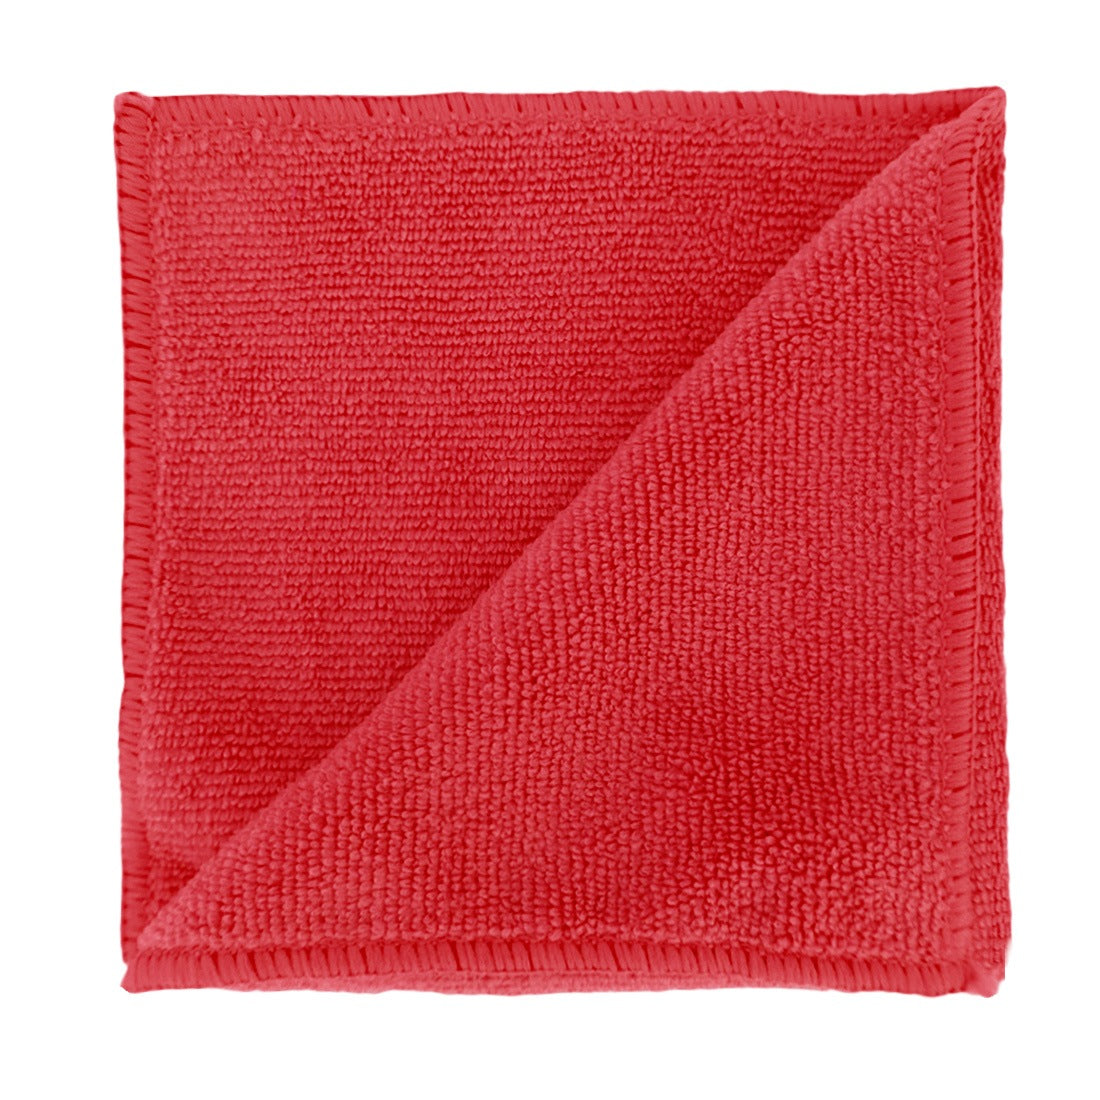 XERO Microfiber Towel Red Front View